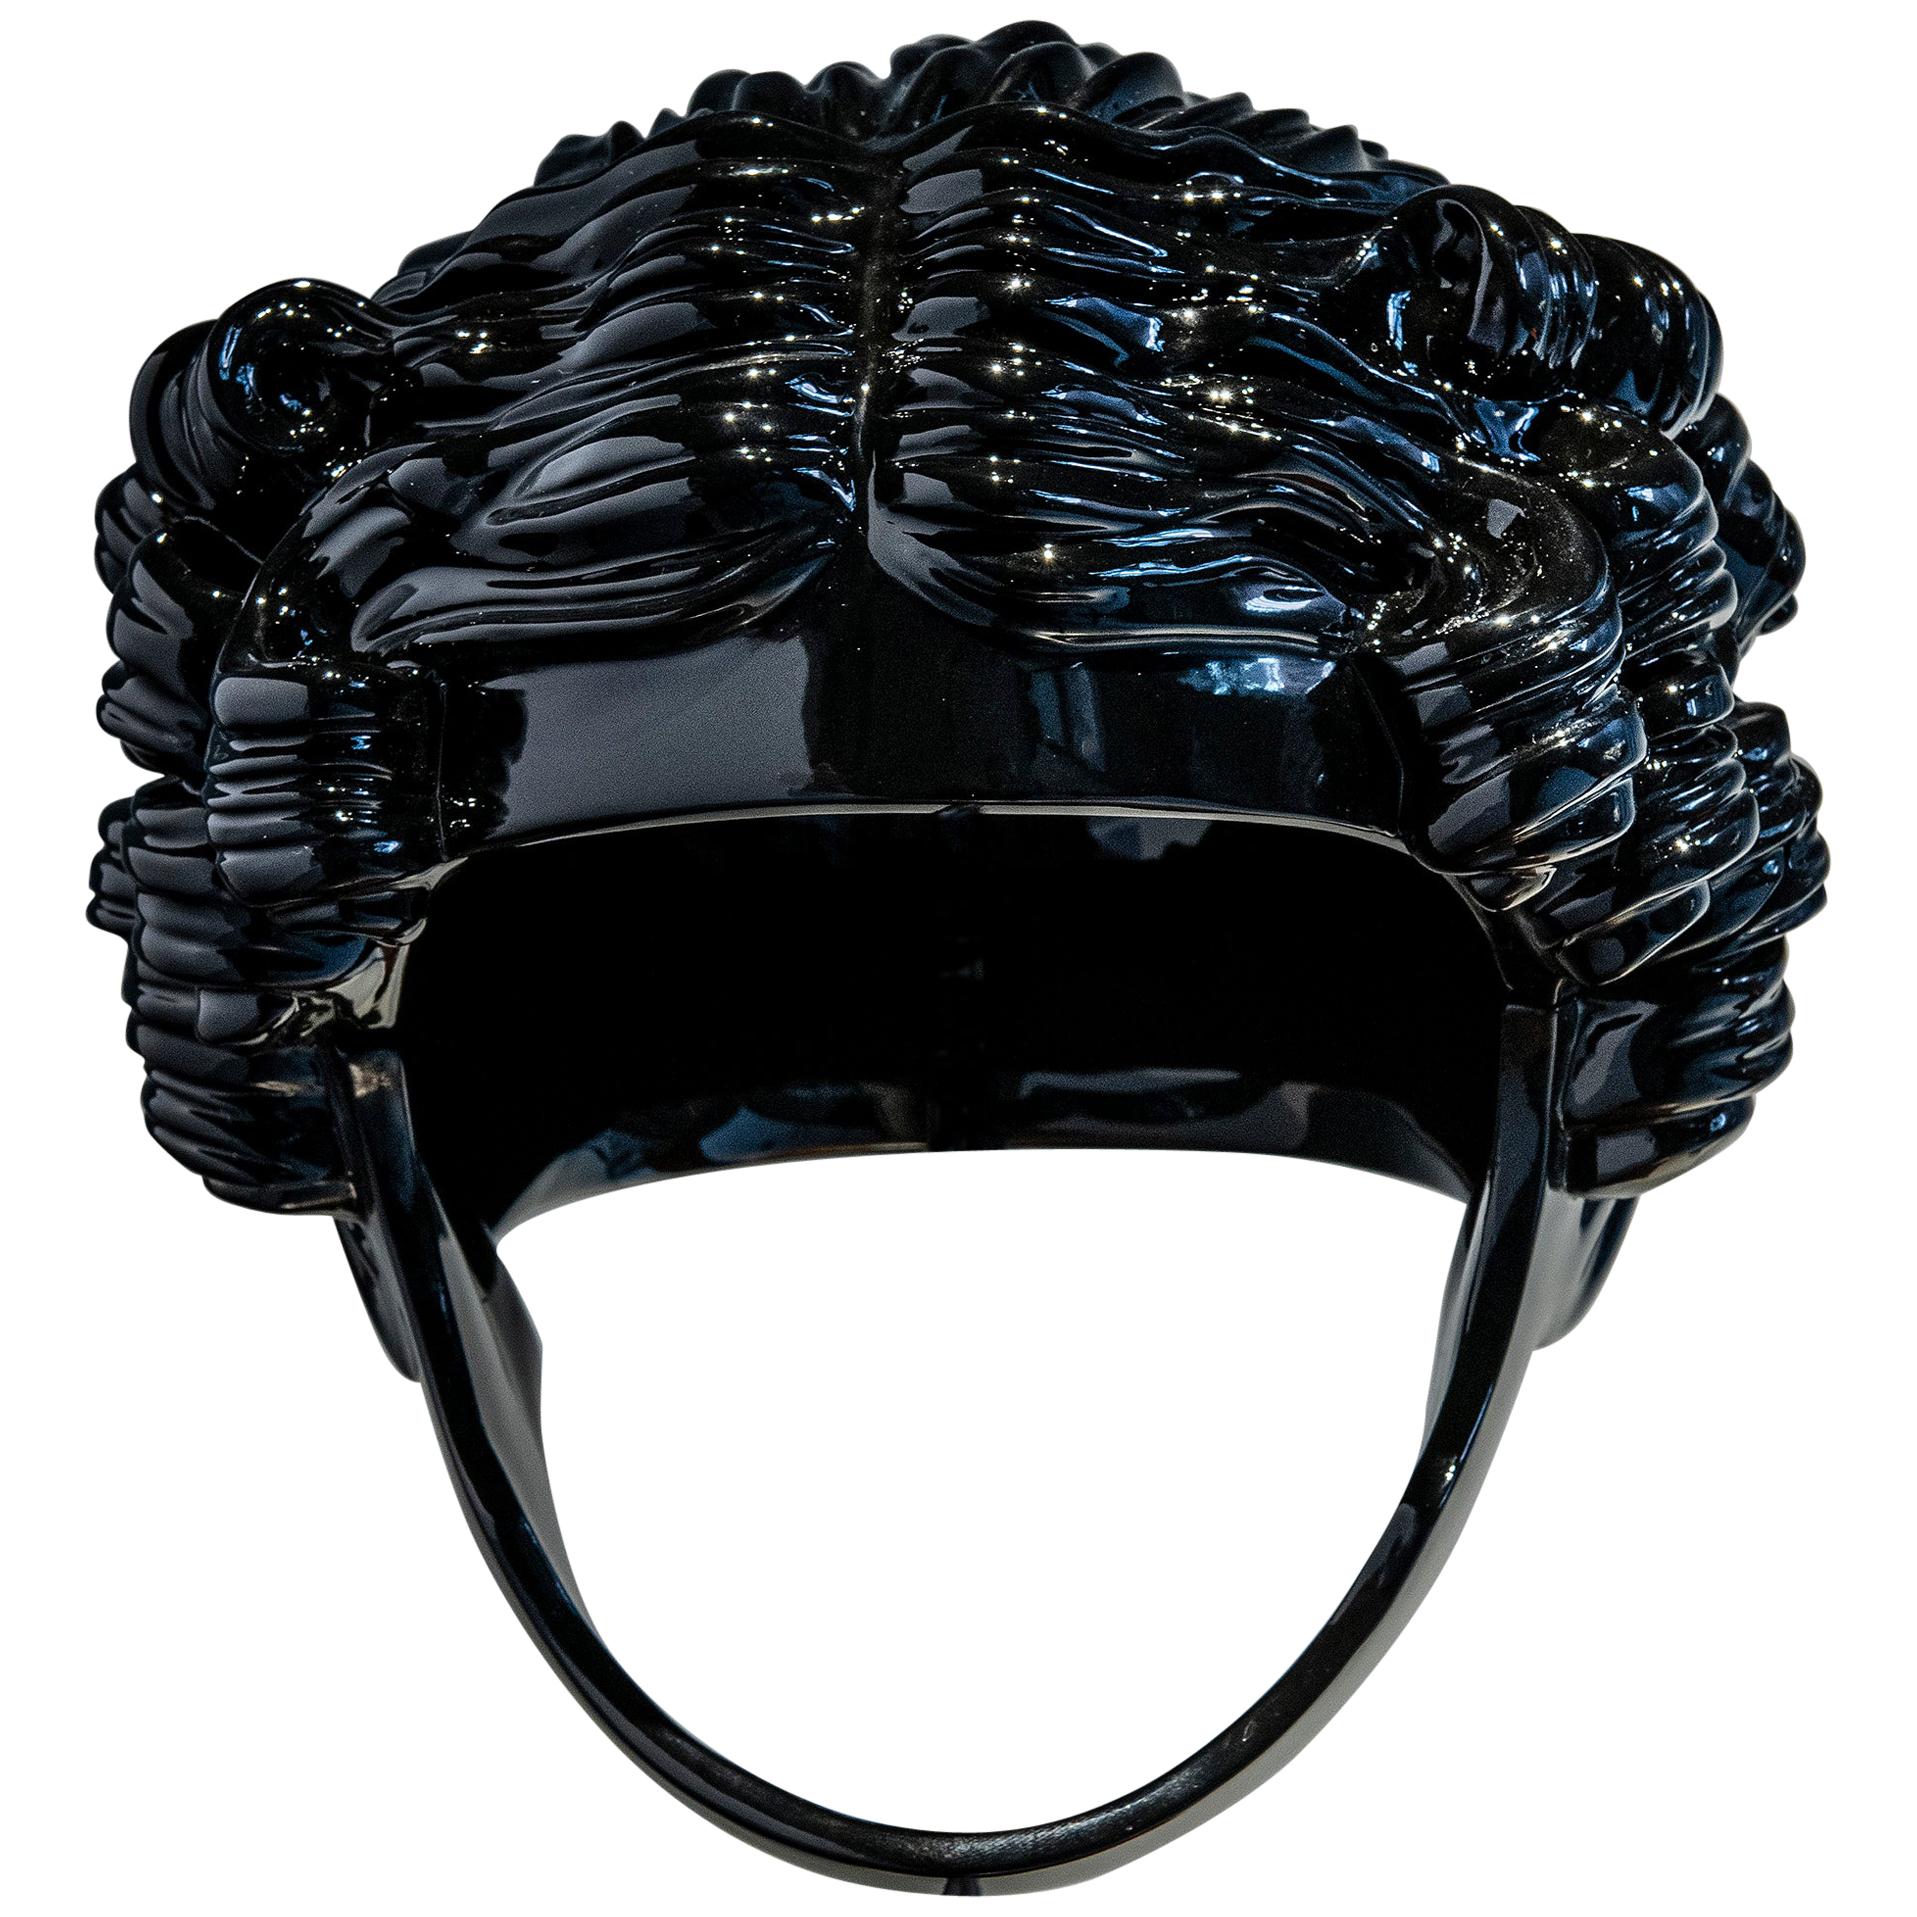 Polyester Resin Helmet Sculpture Titled "Osée" by Fabián Bercic, Argentina, 2020